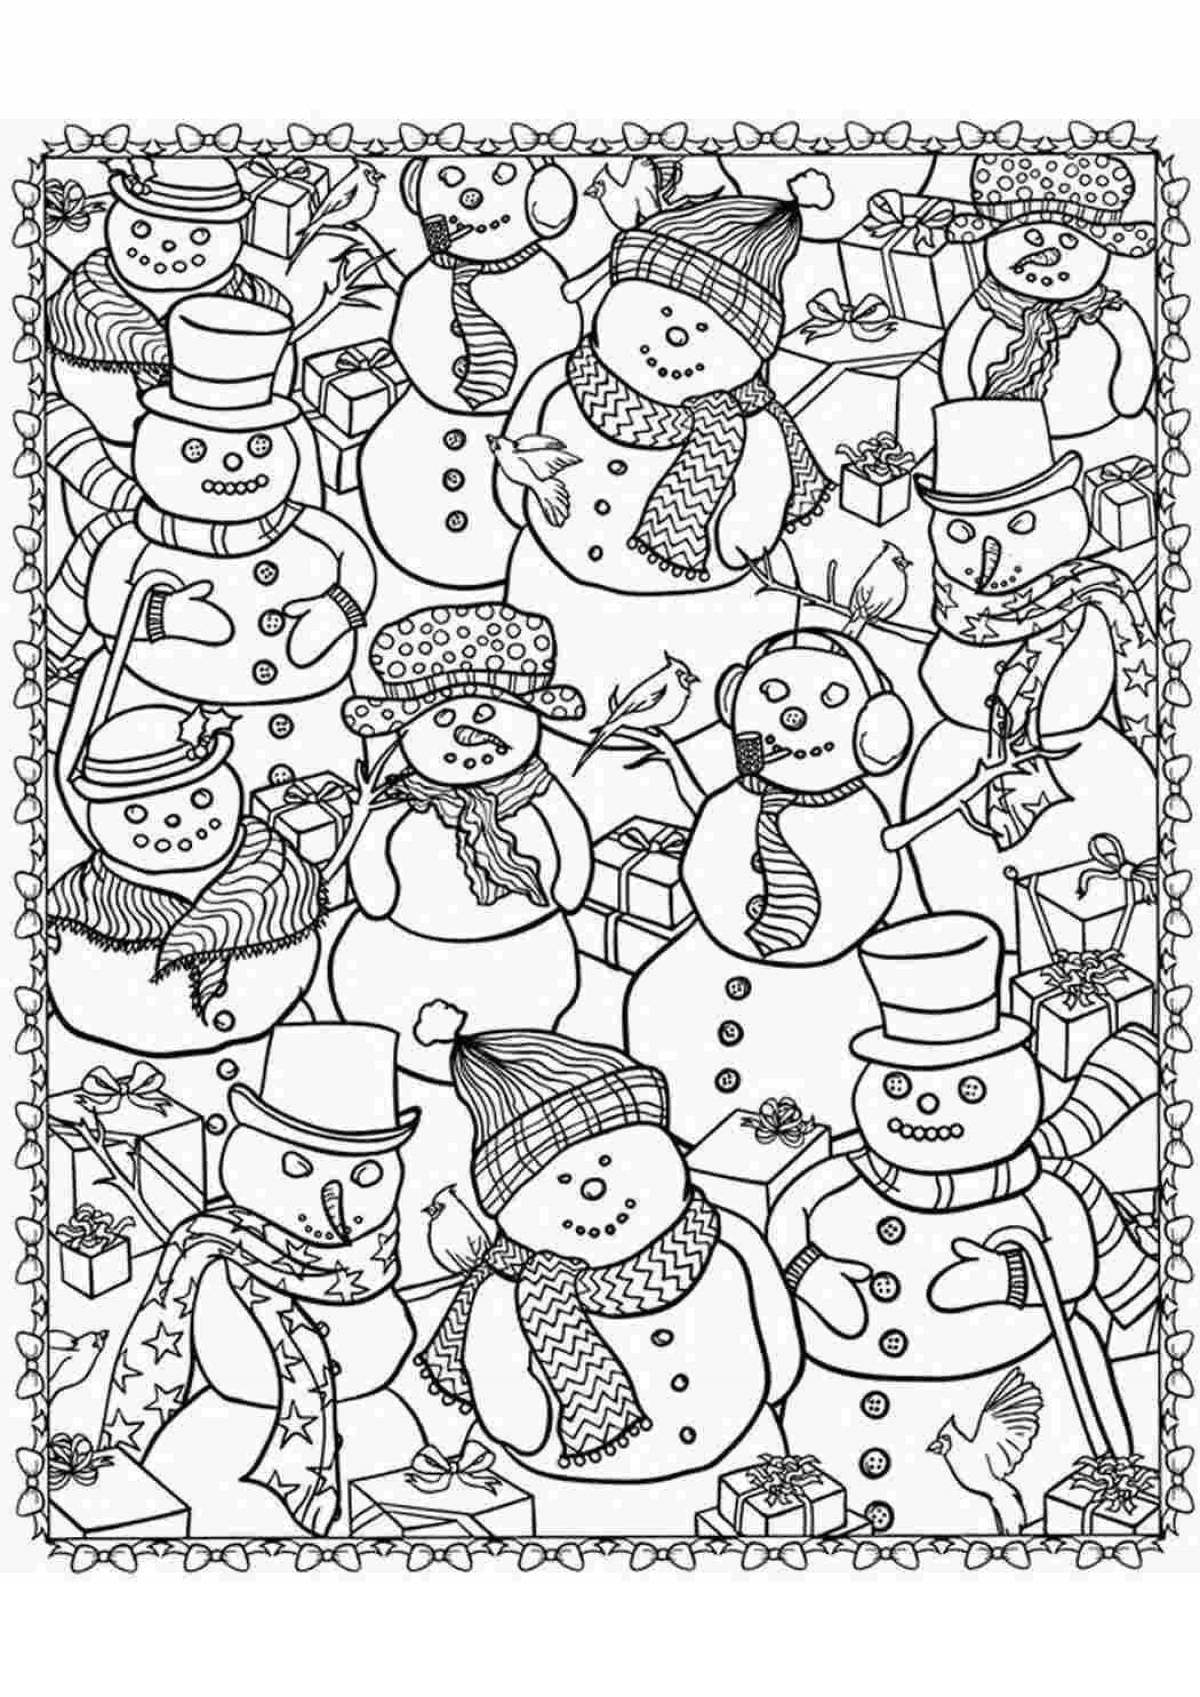 Snowman school live coloring